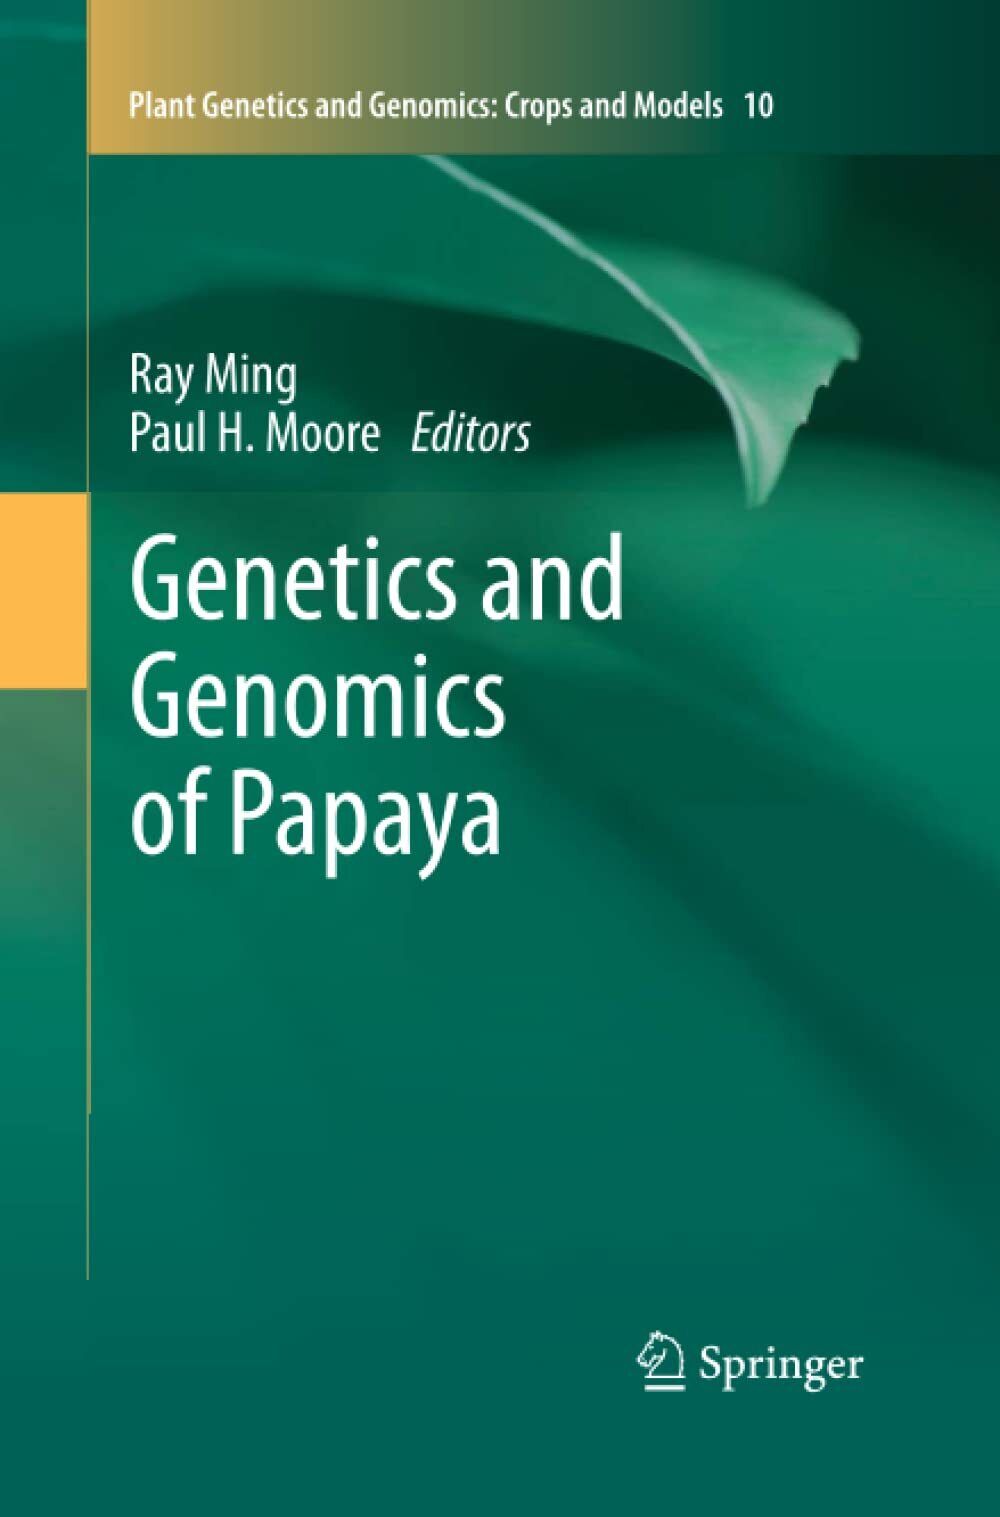 Genetics and Genomics of Papaya - Ray Ming - Springer, 2015